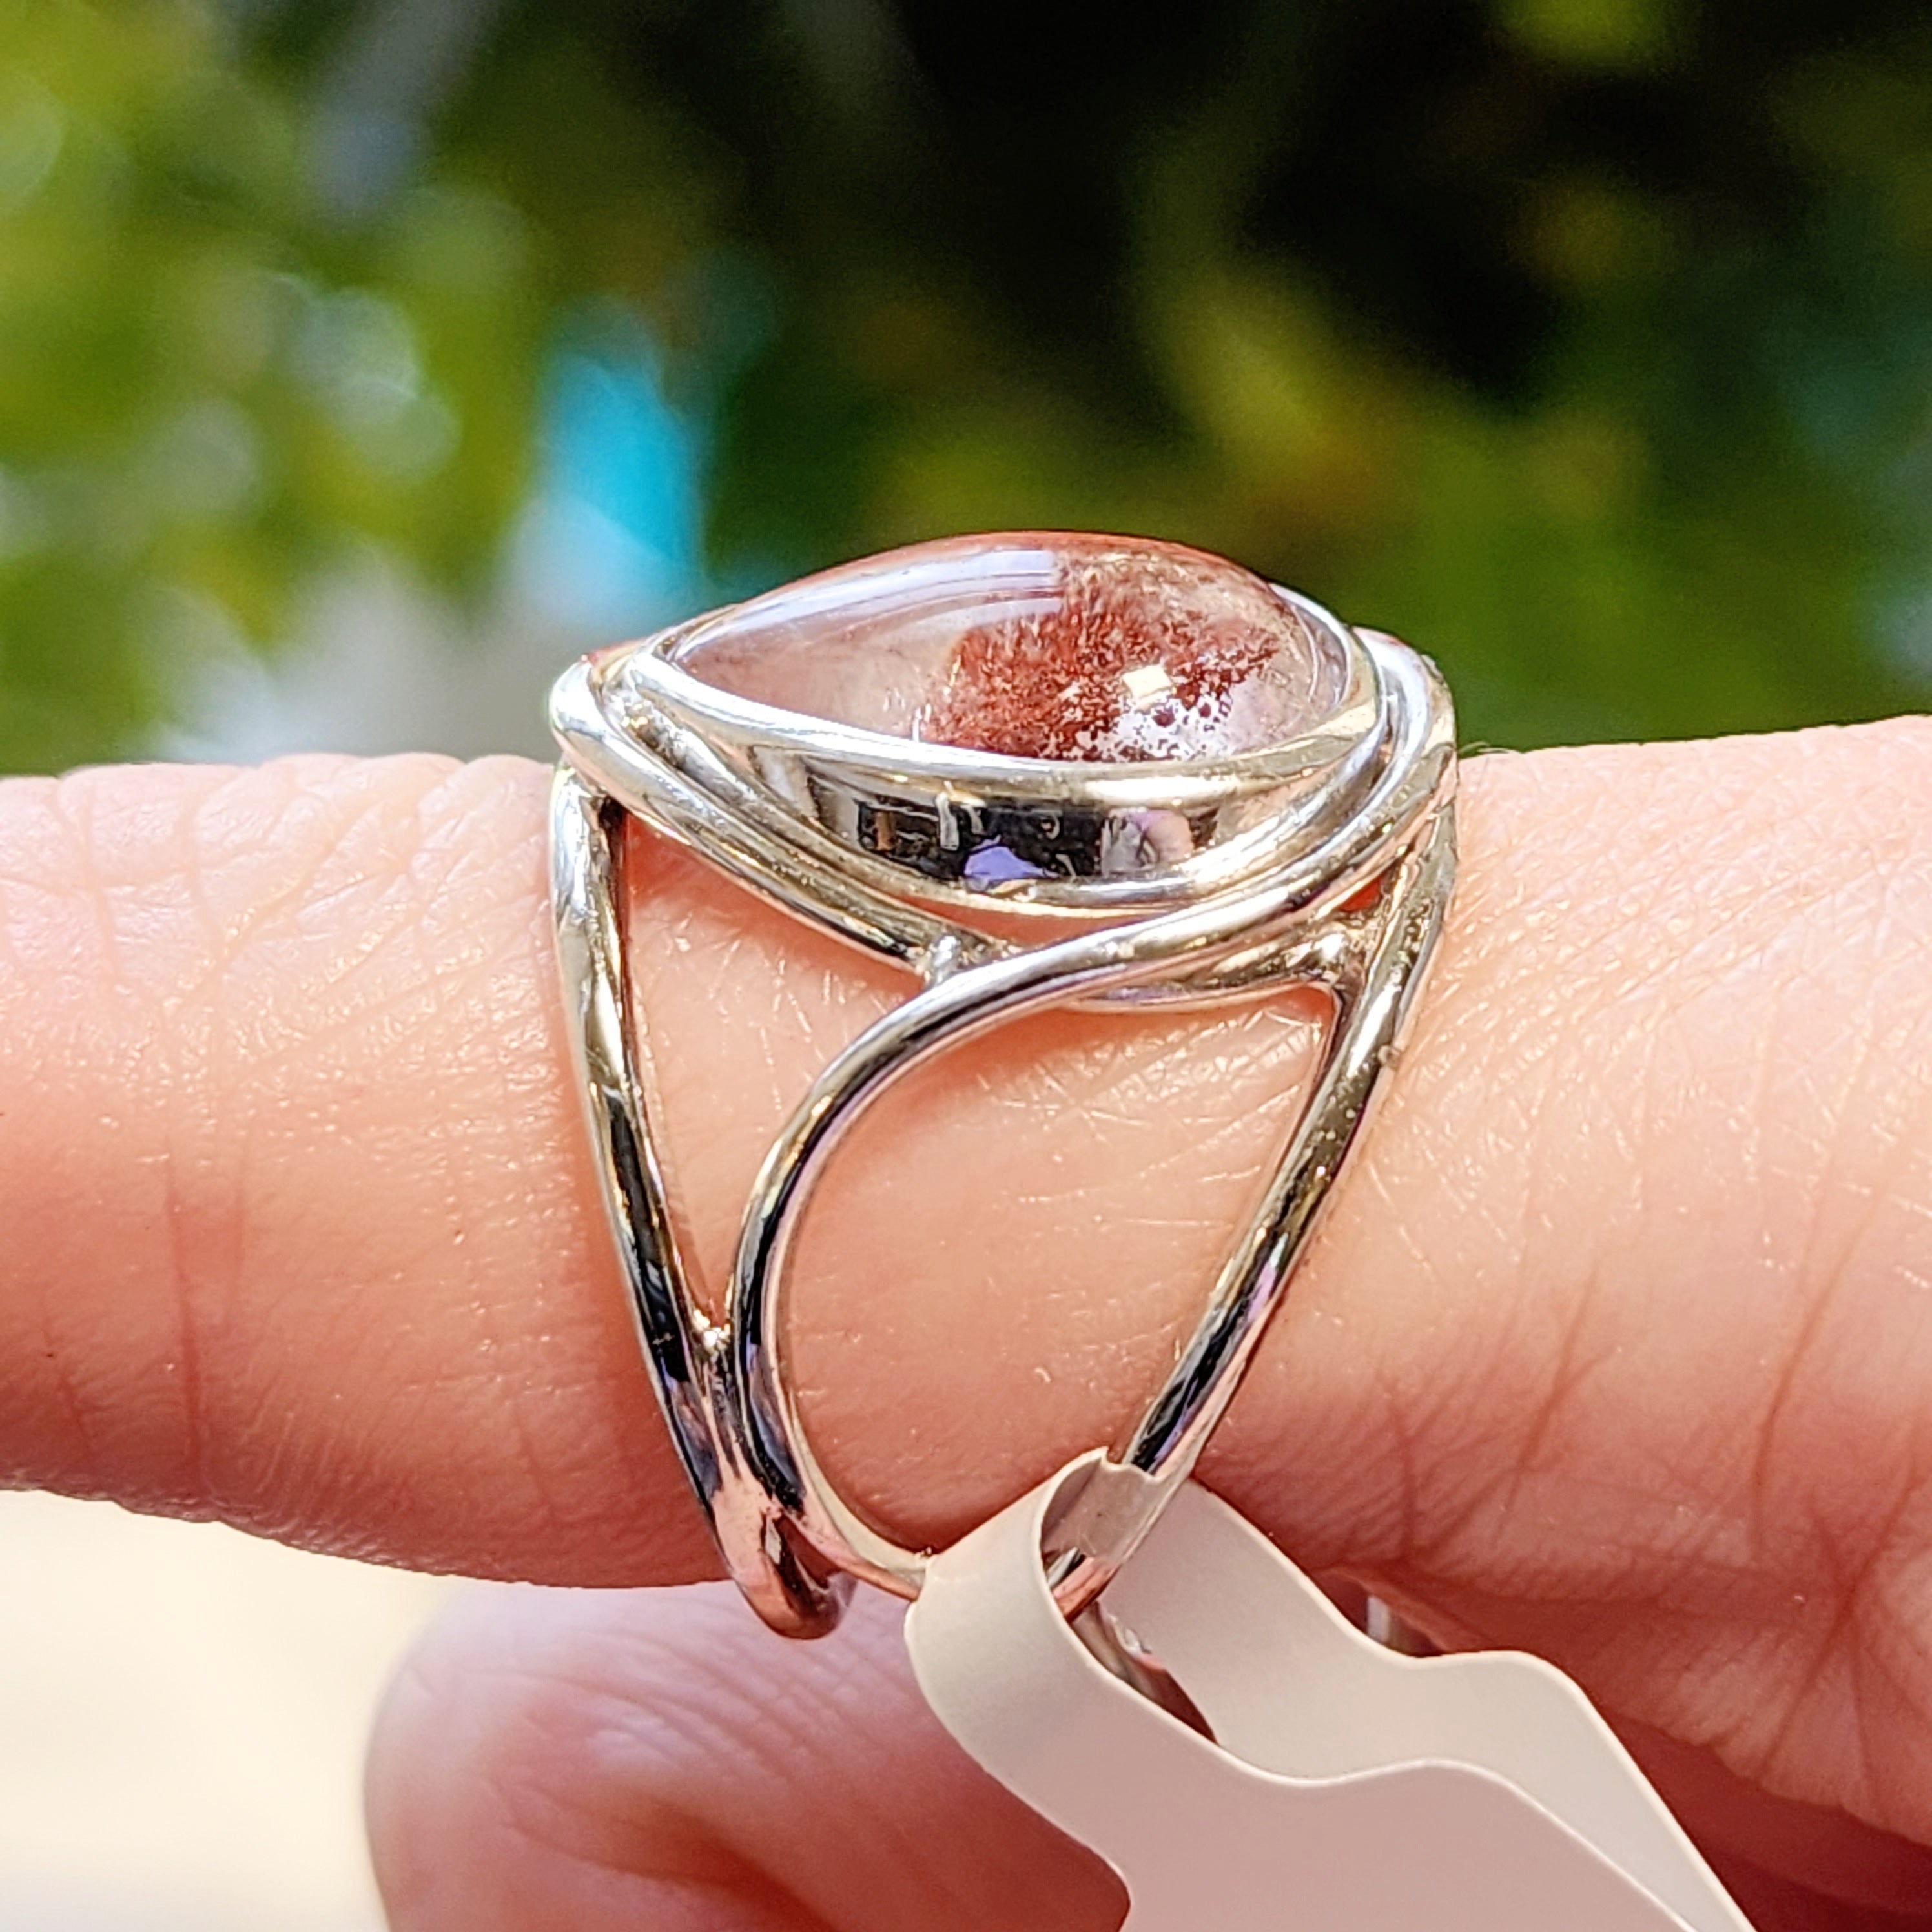 Lepidocrocite Phantom in Quartz Finger Cuff Adjustable Ring .925 Silver for Harmonizing Relationships and Emotional Healing